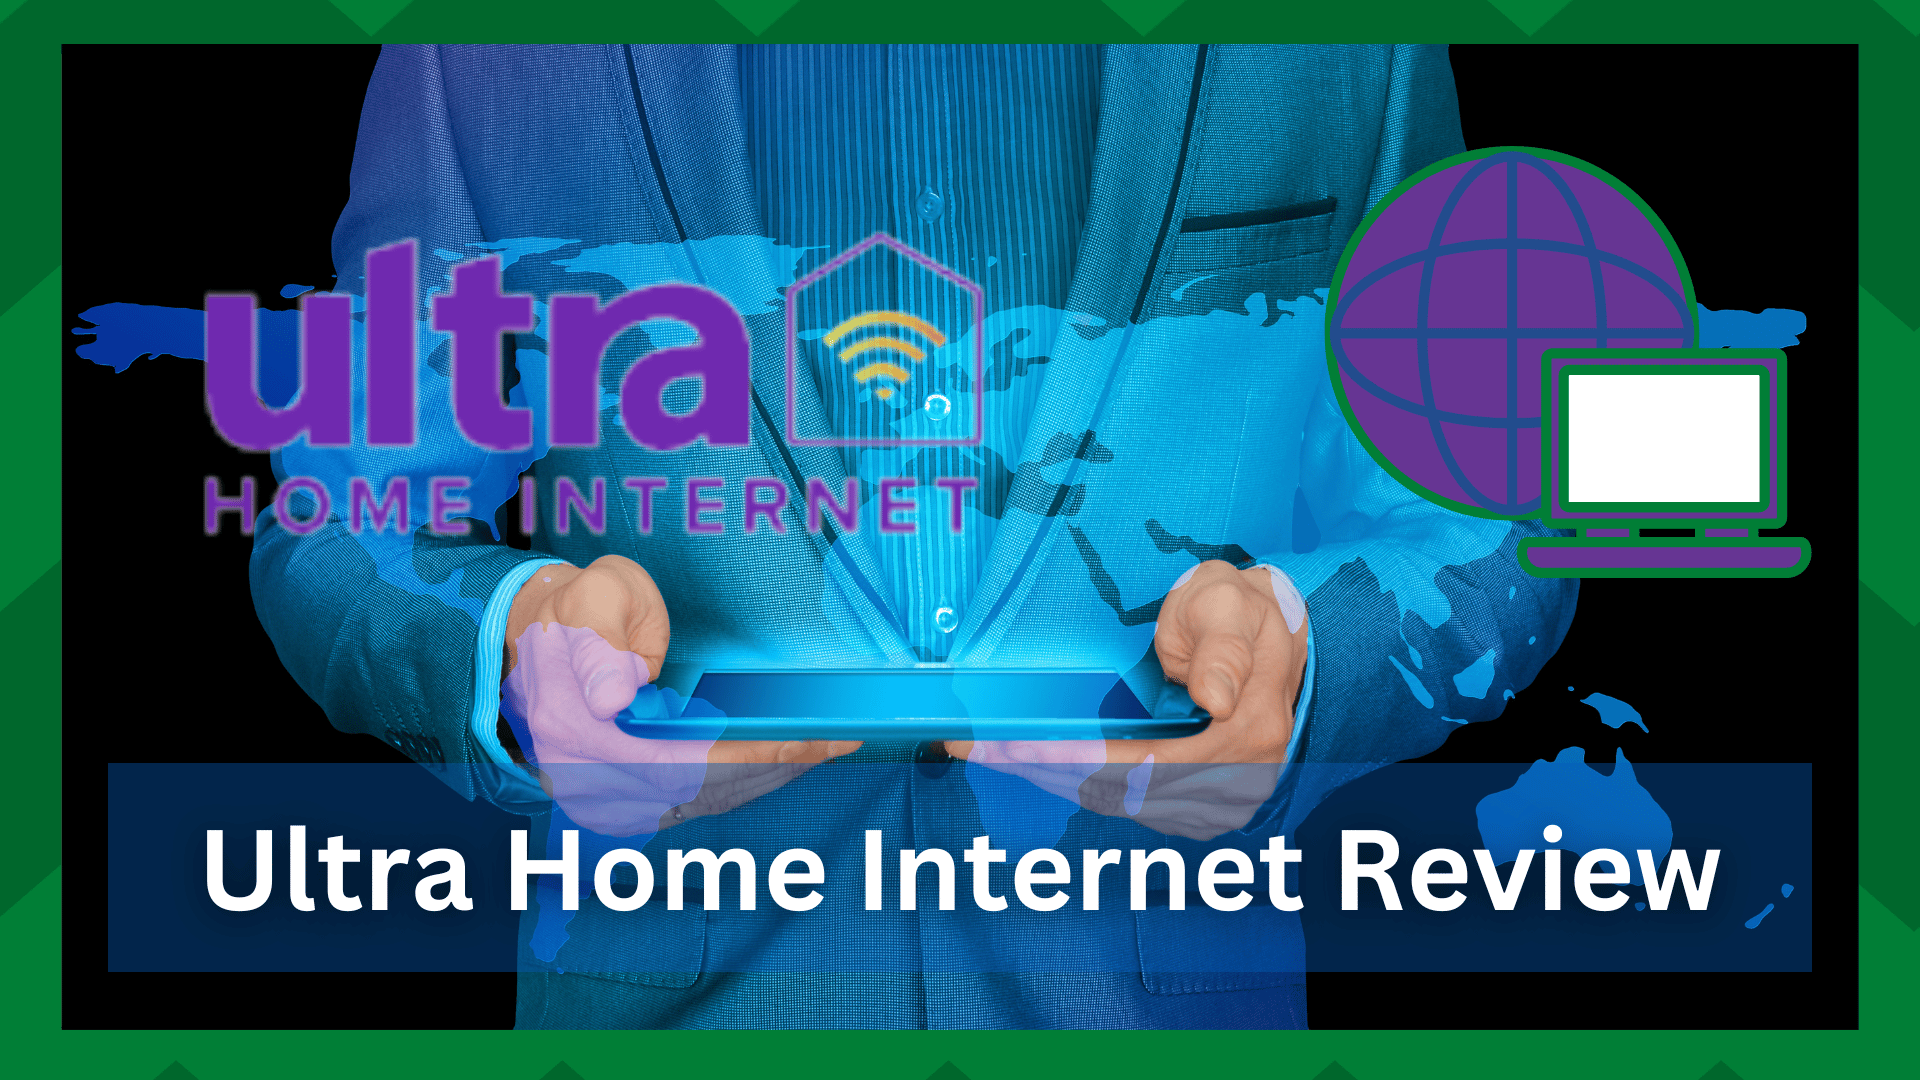 Ultra Home Internet Review - Moet je ervoor gaan?